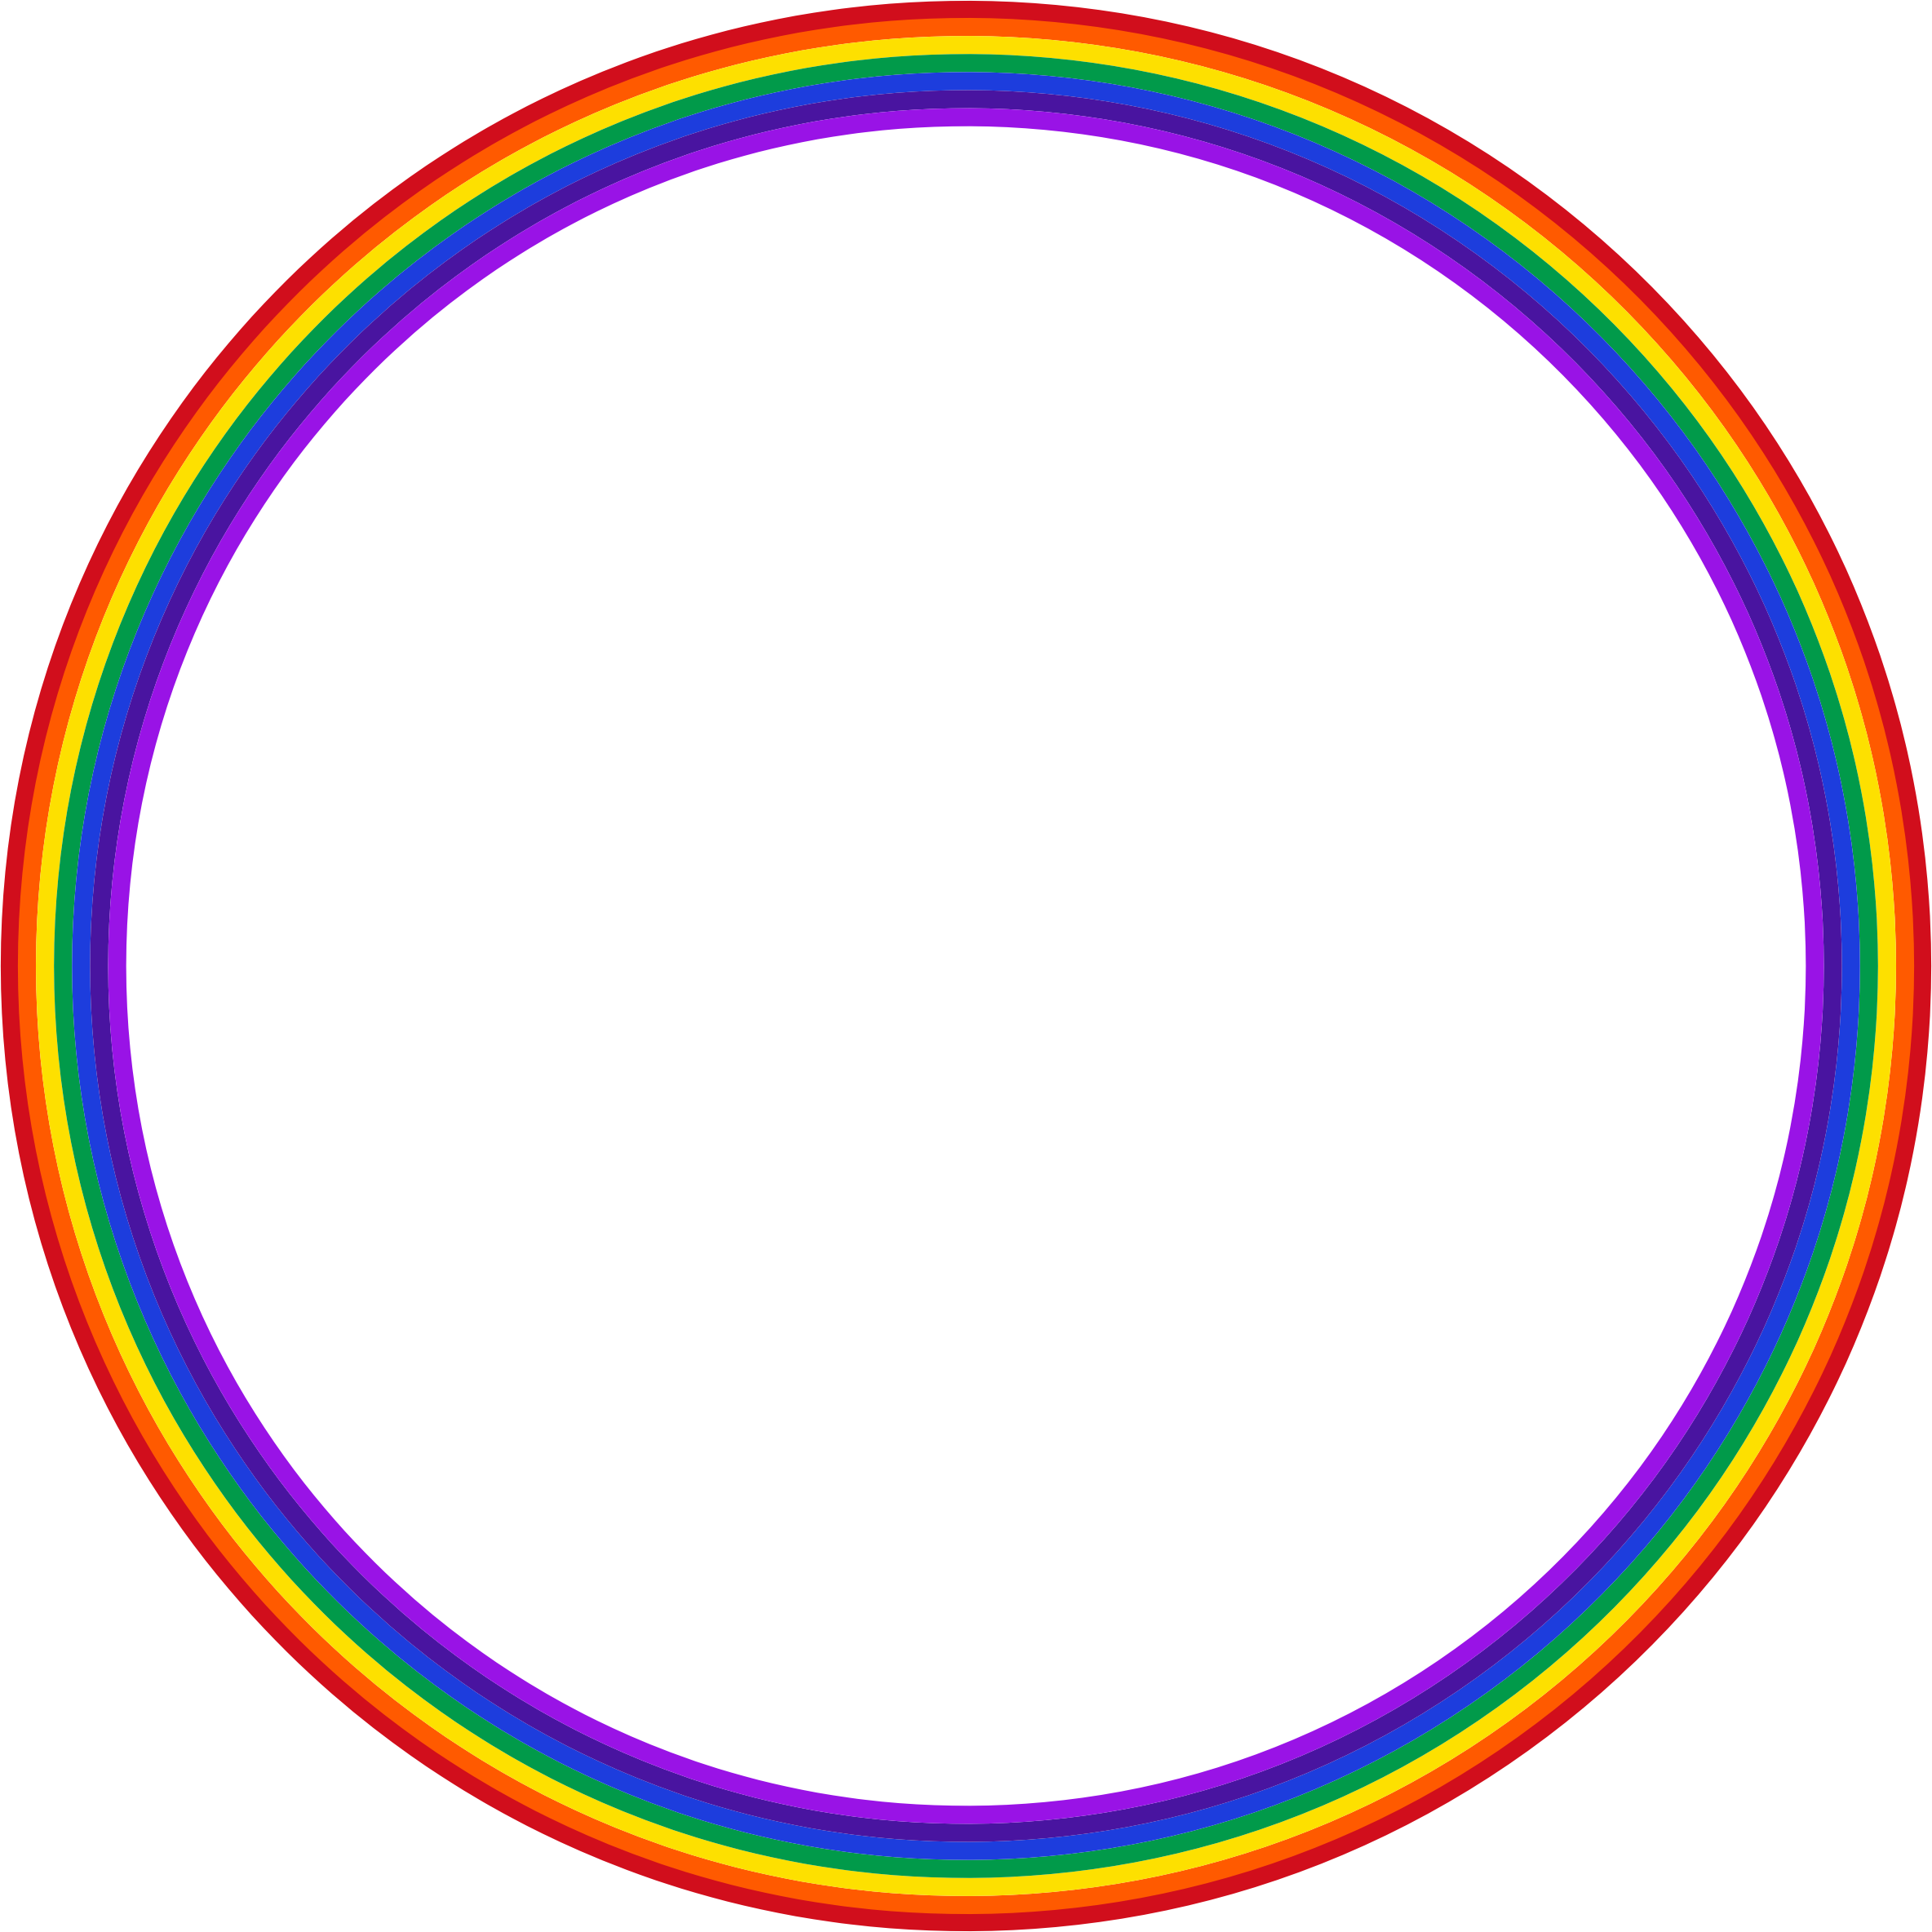 rainbow circle clipart - Clipground